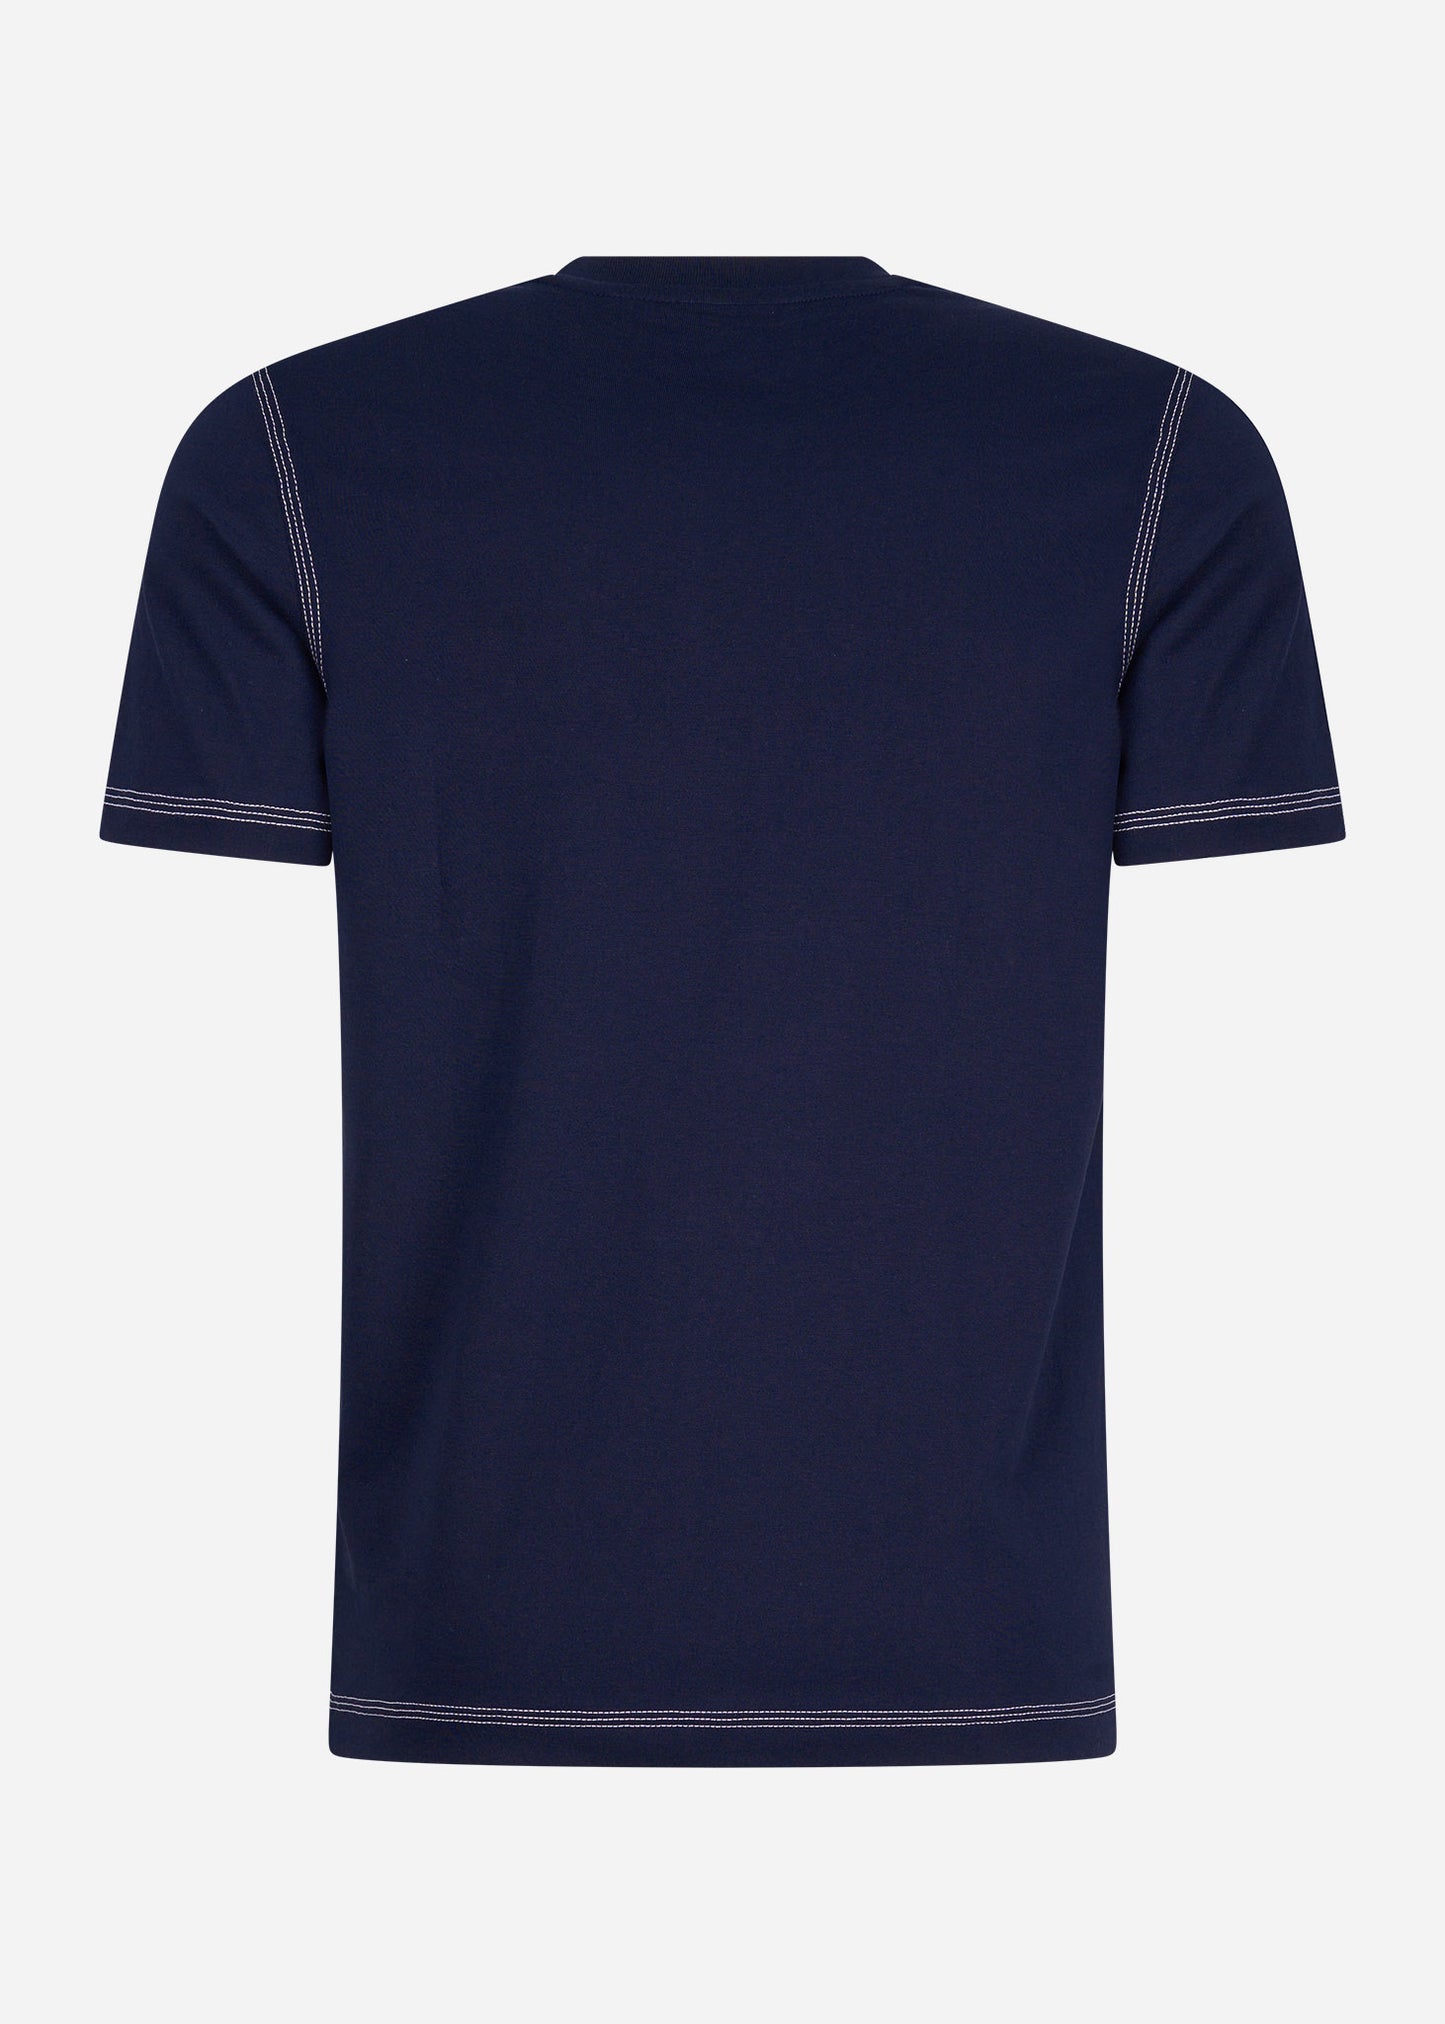 Club lacoste t-shirt - navy blue